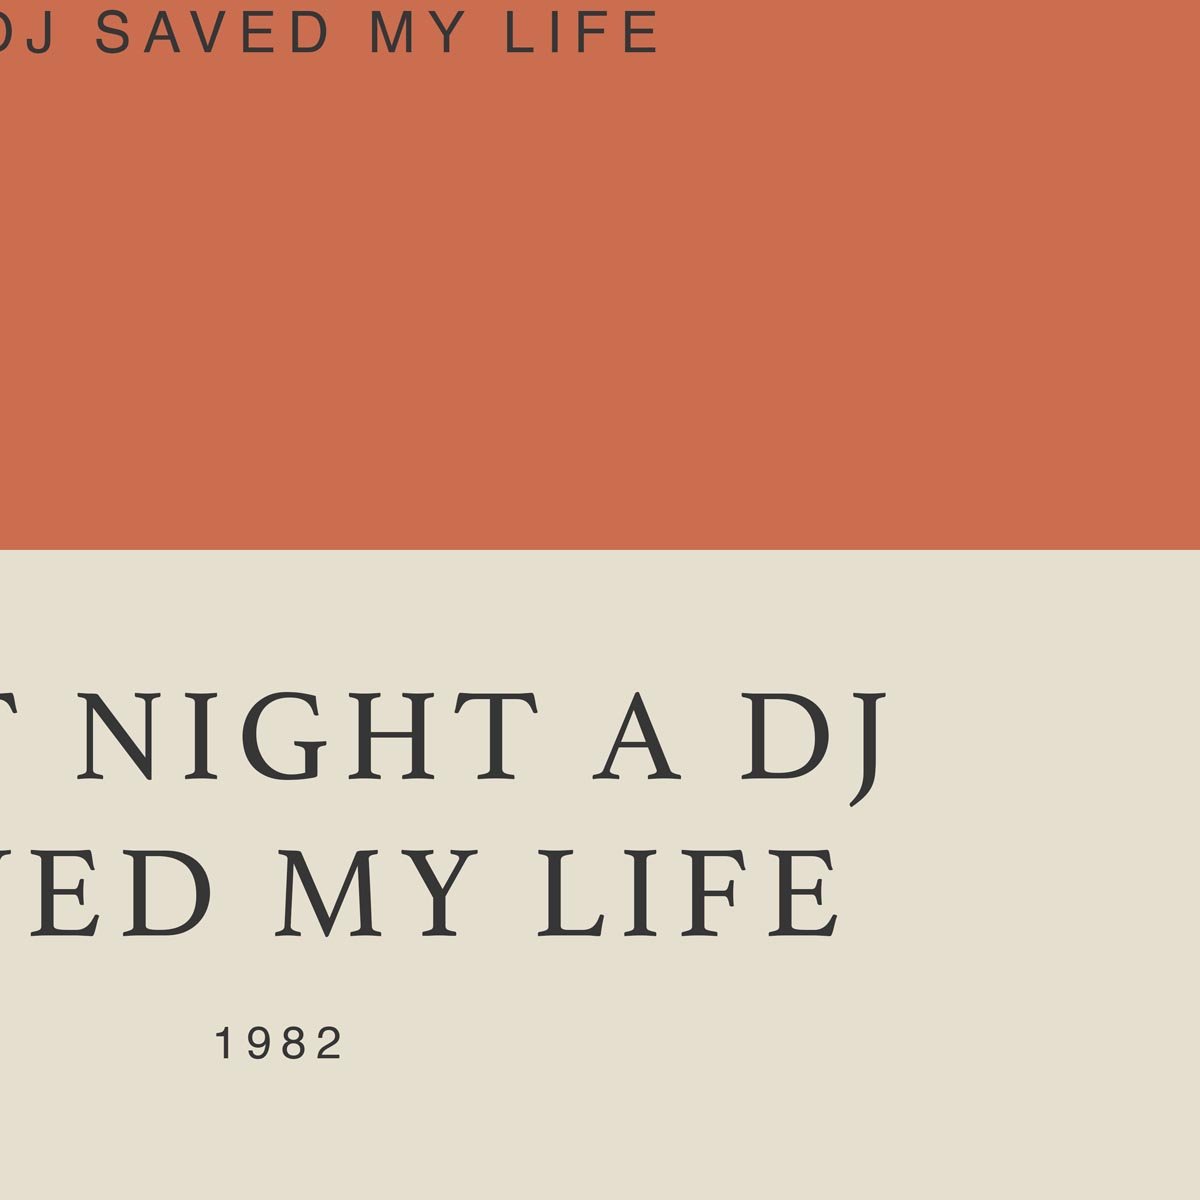 Last Night a DJ Saved My Life by Indeep